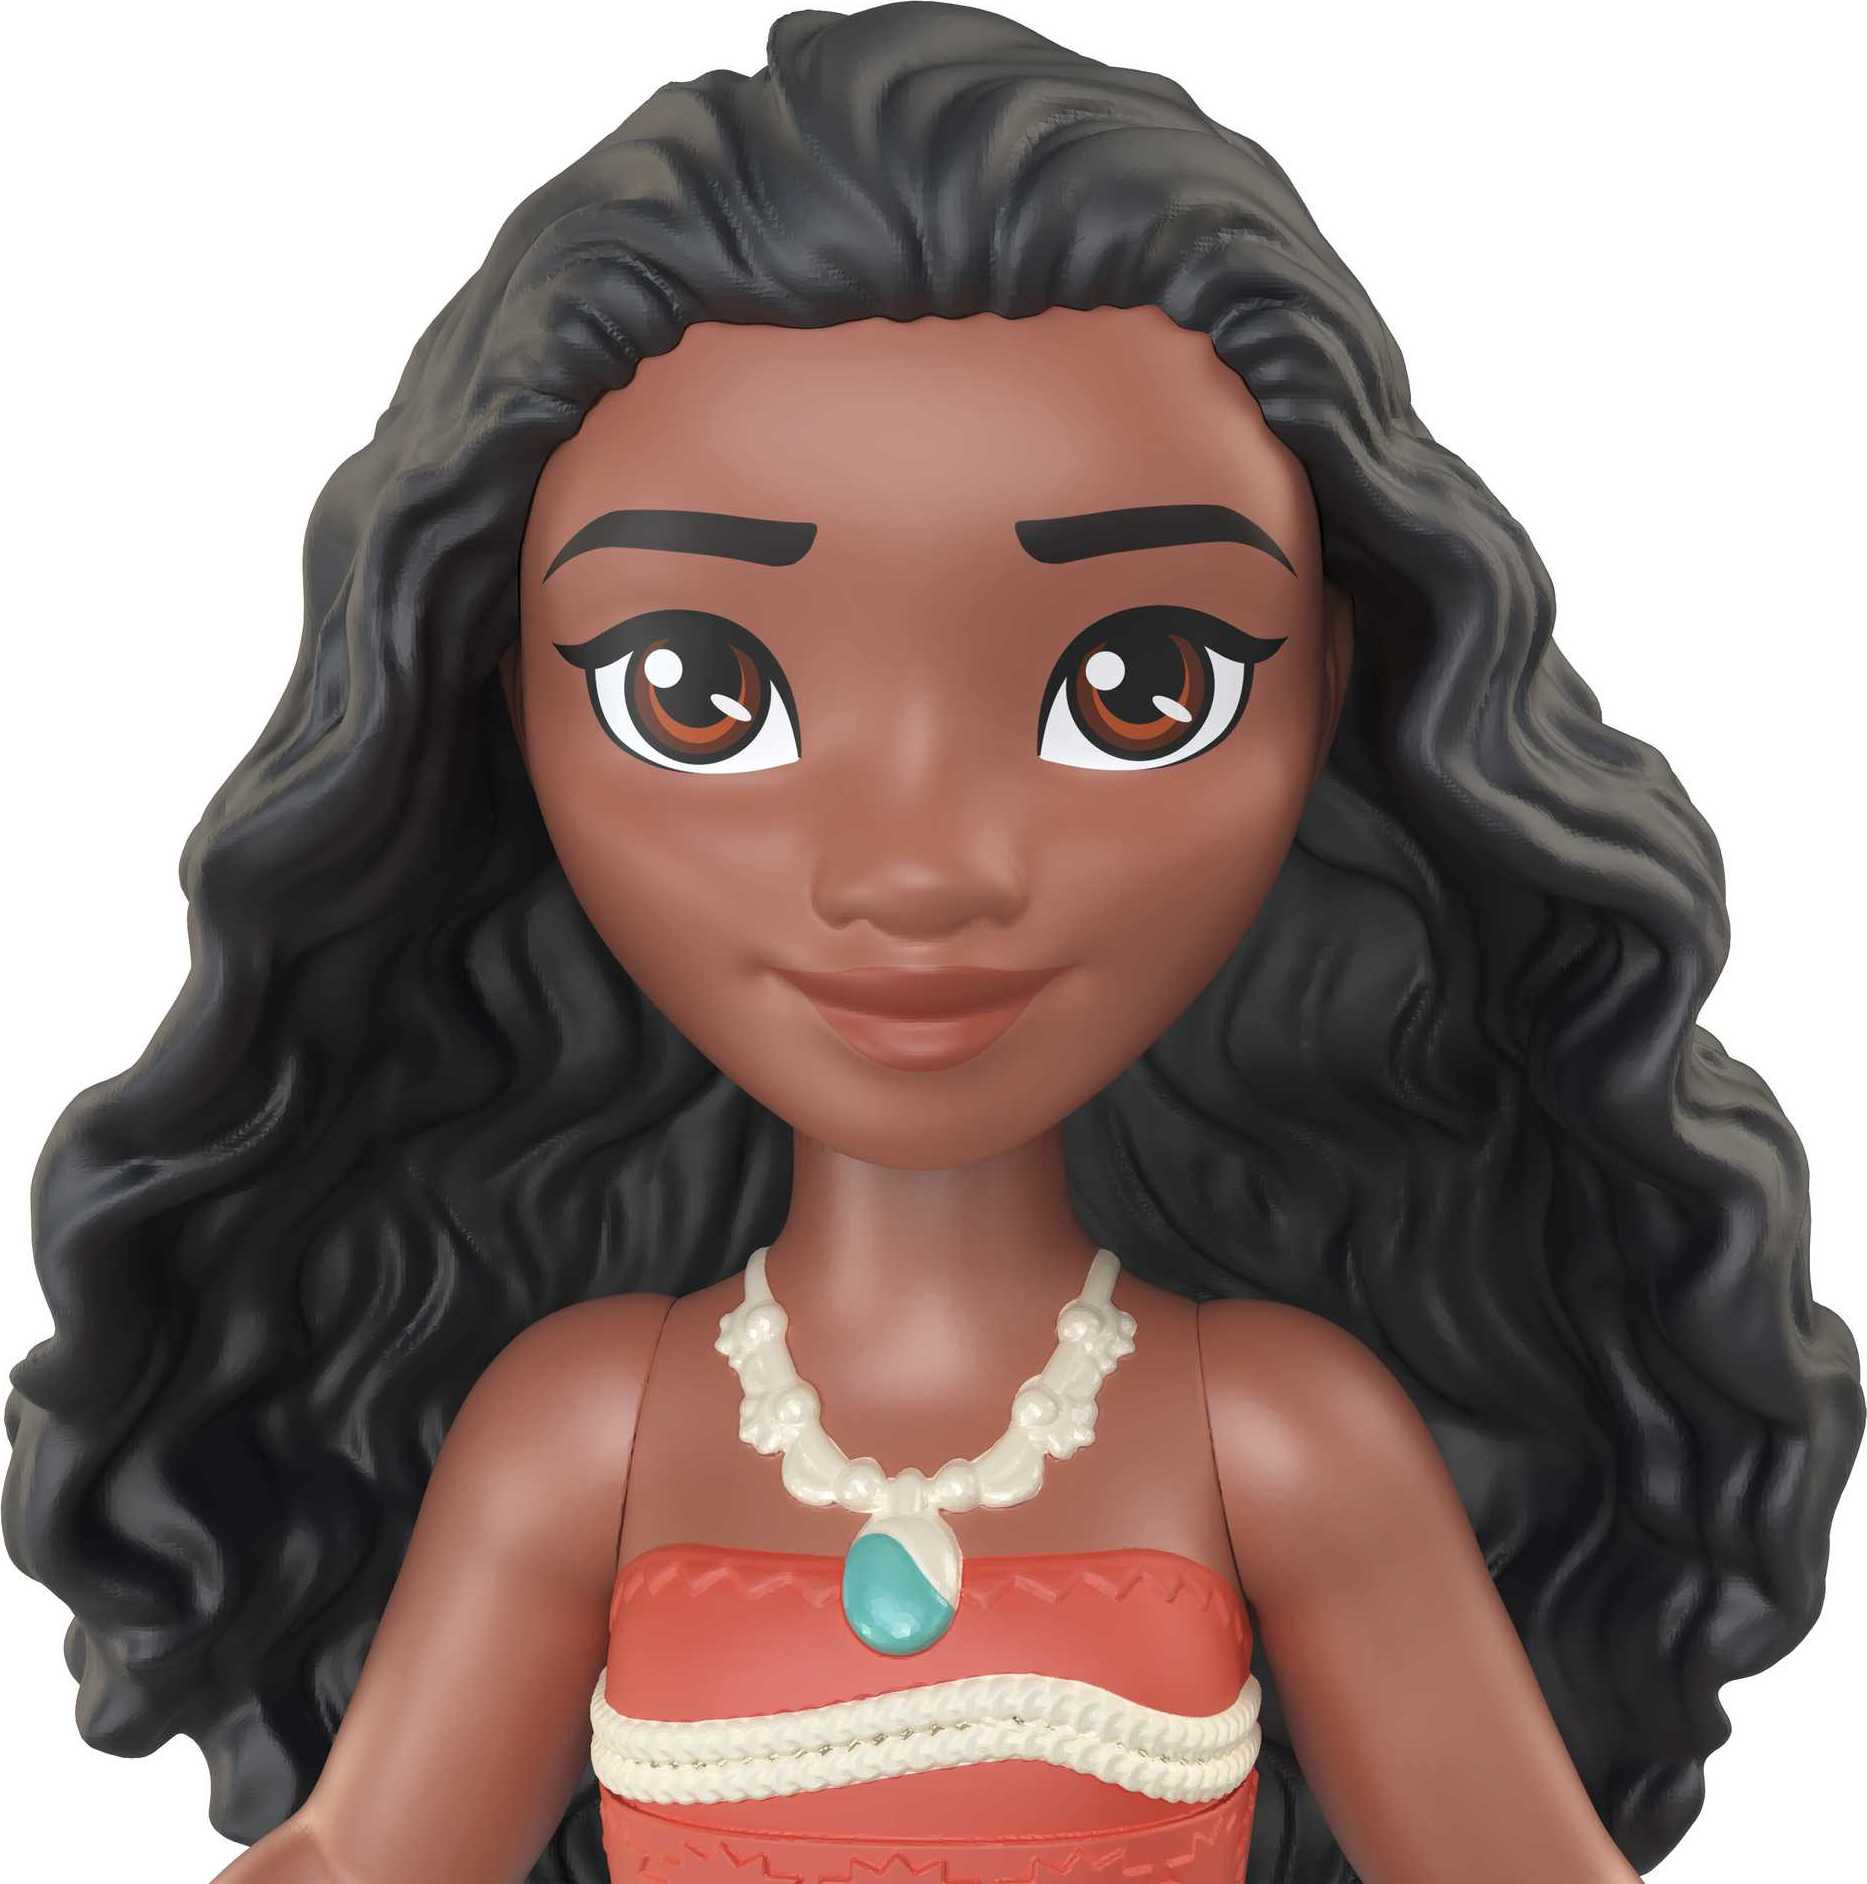 Disney Princess Moana Small Doll, Brown Hair & Brown Eyes, Signature 2-Piece Look - image 4 of 6